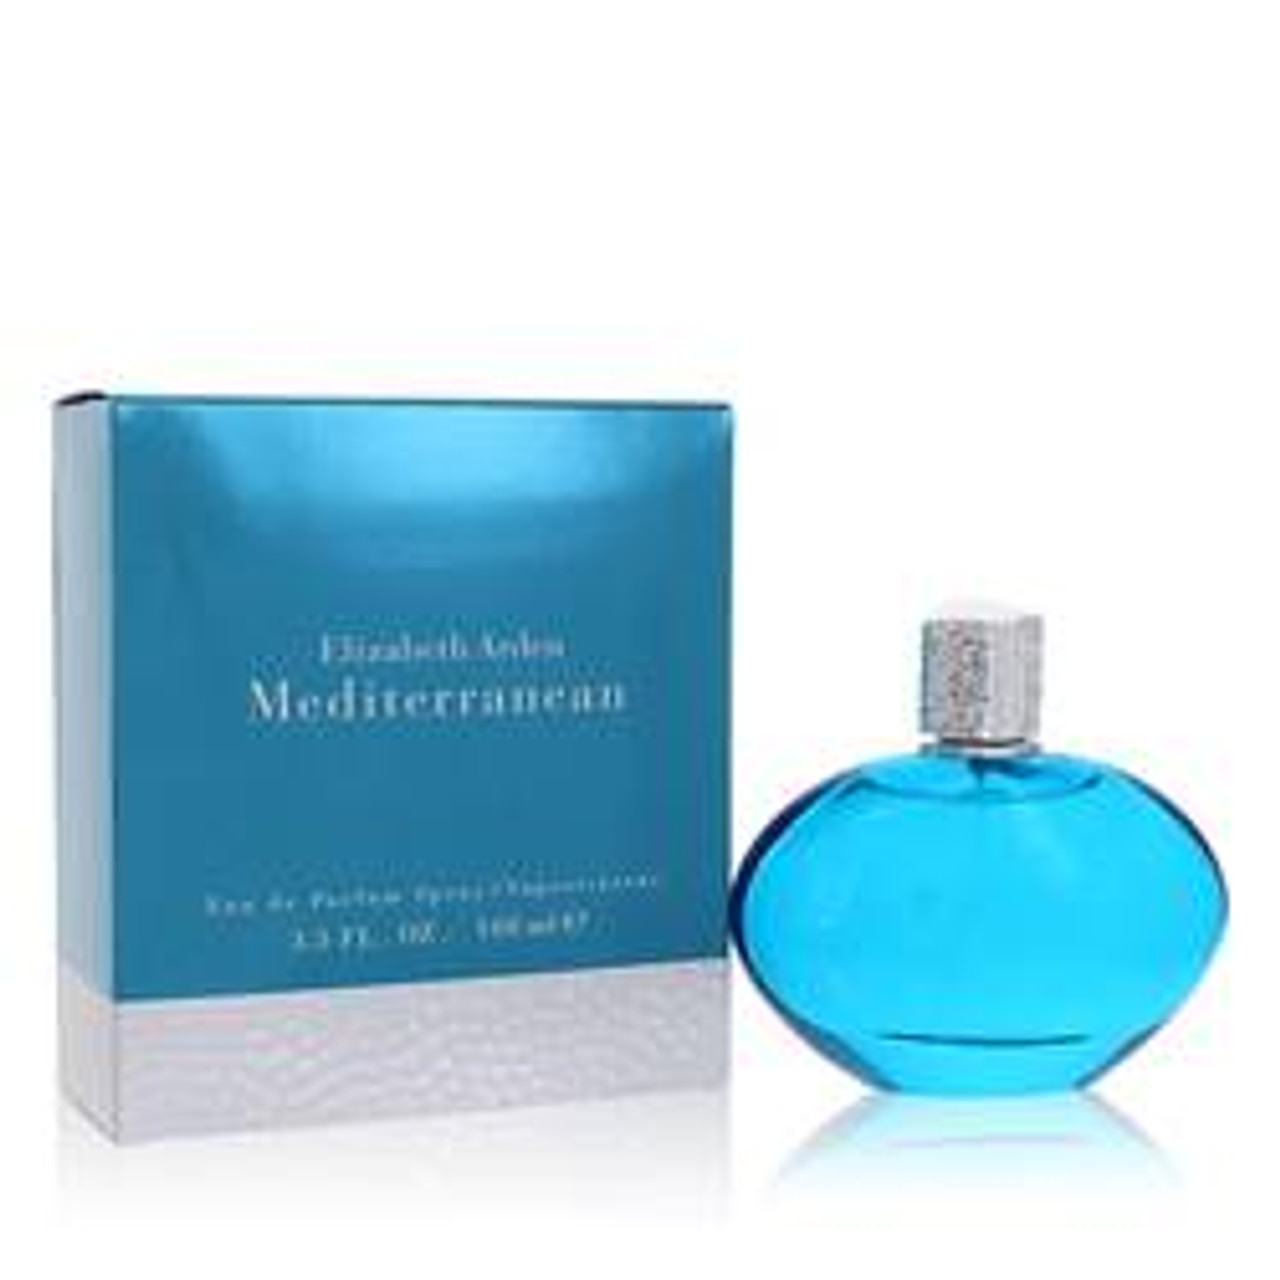 Mediterranean Perfume By Elizabeth Arden Eau De Parfum Spray 3.4 oz for Women - [From 59.00 - Choose pk Qty ] - *Ships from Miami